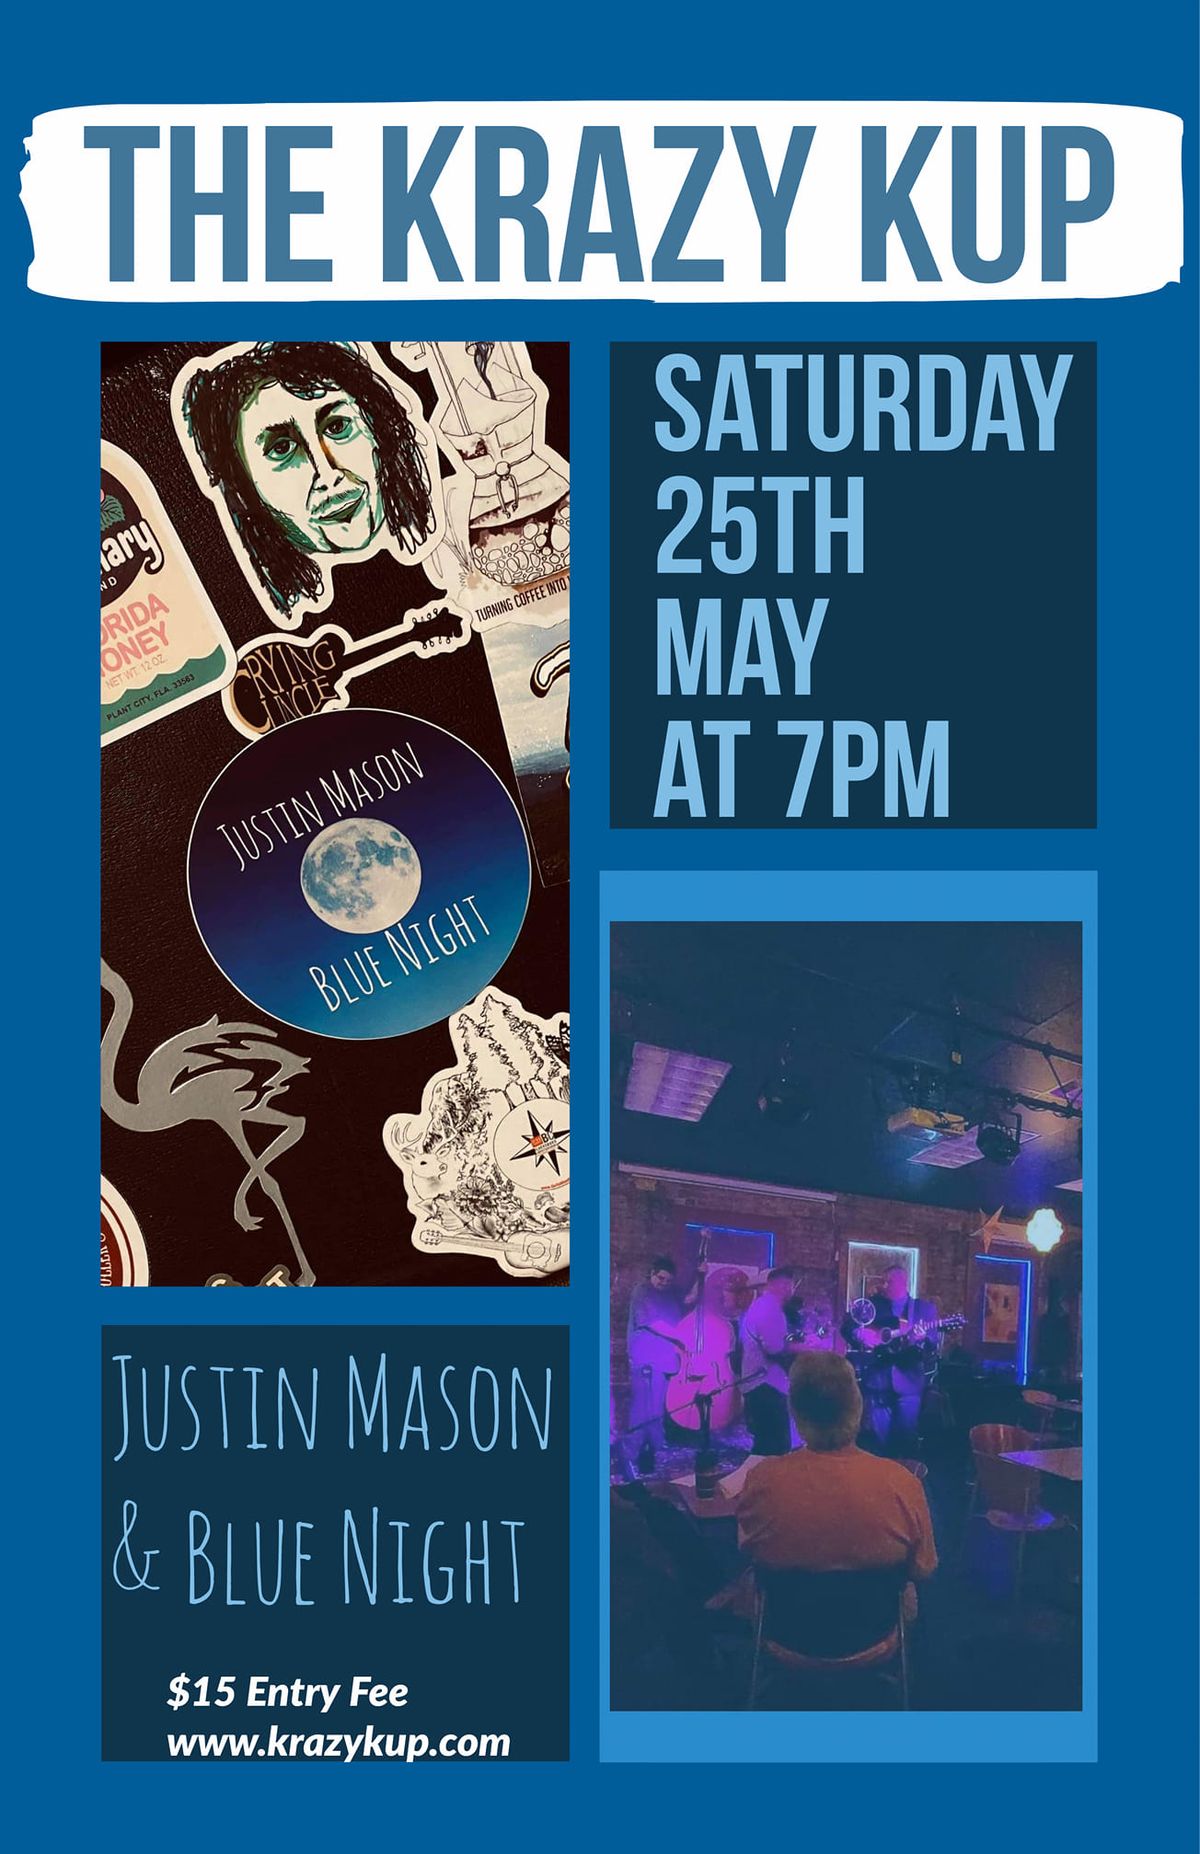 Justin Mason & Blue Night at The Krazy Kup